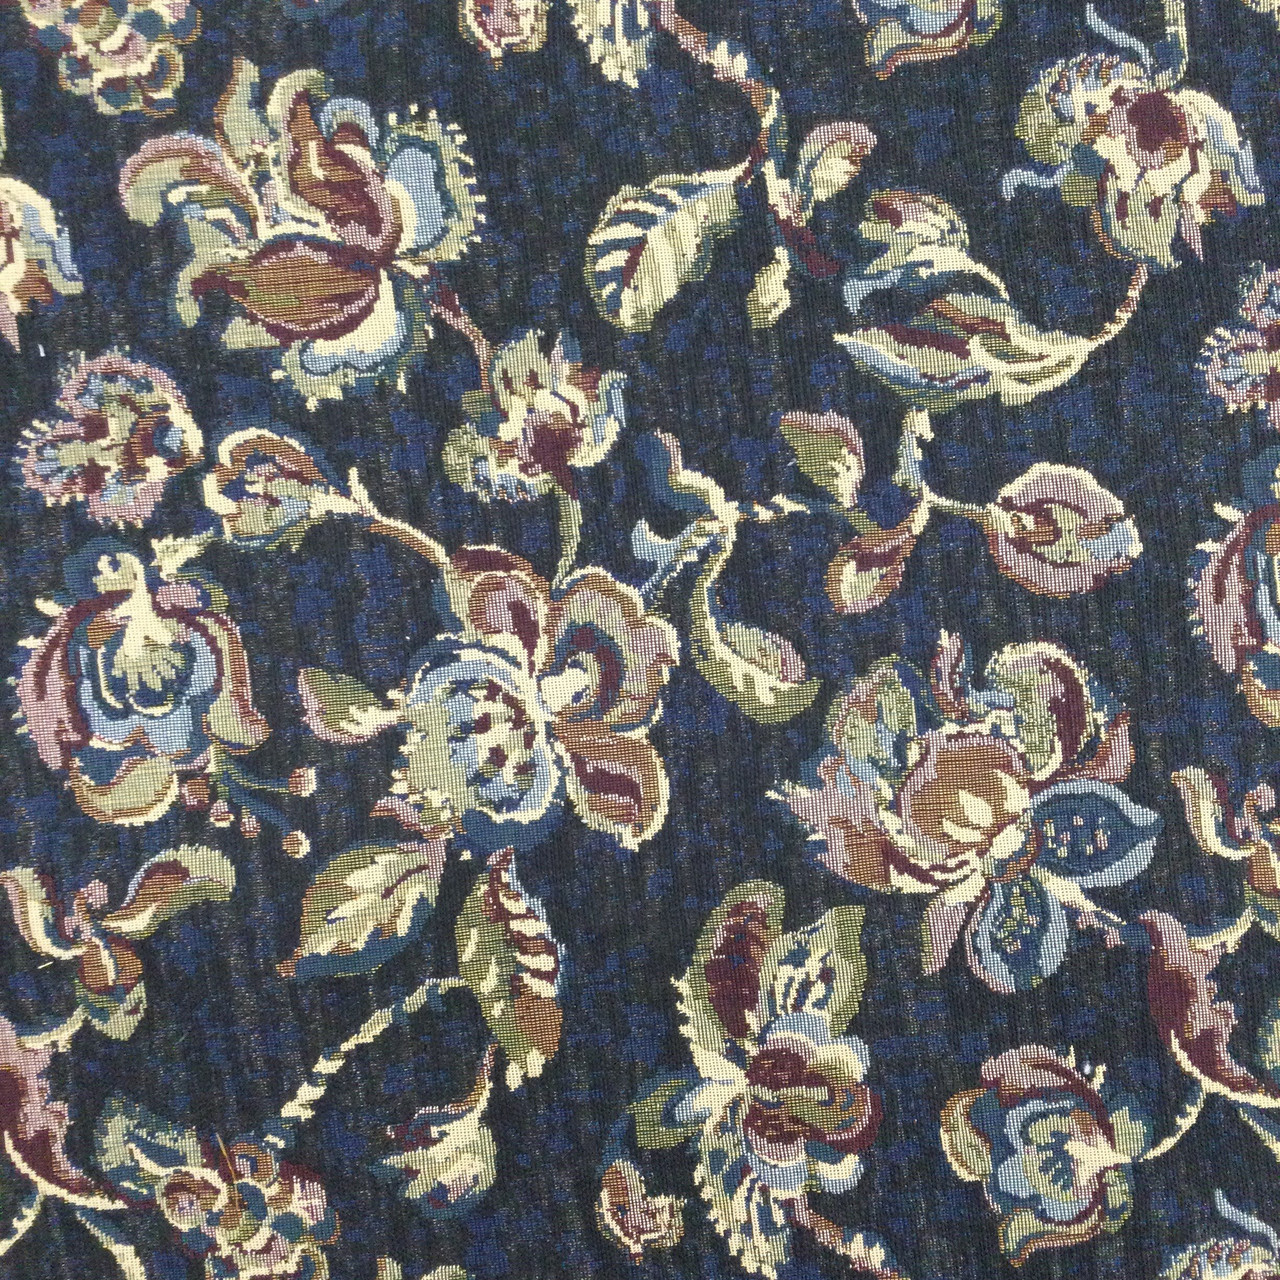 navy blue floral pattern